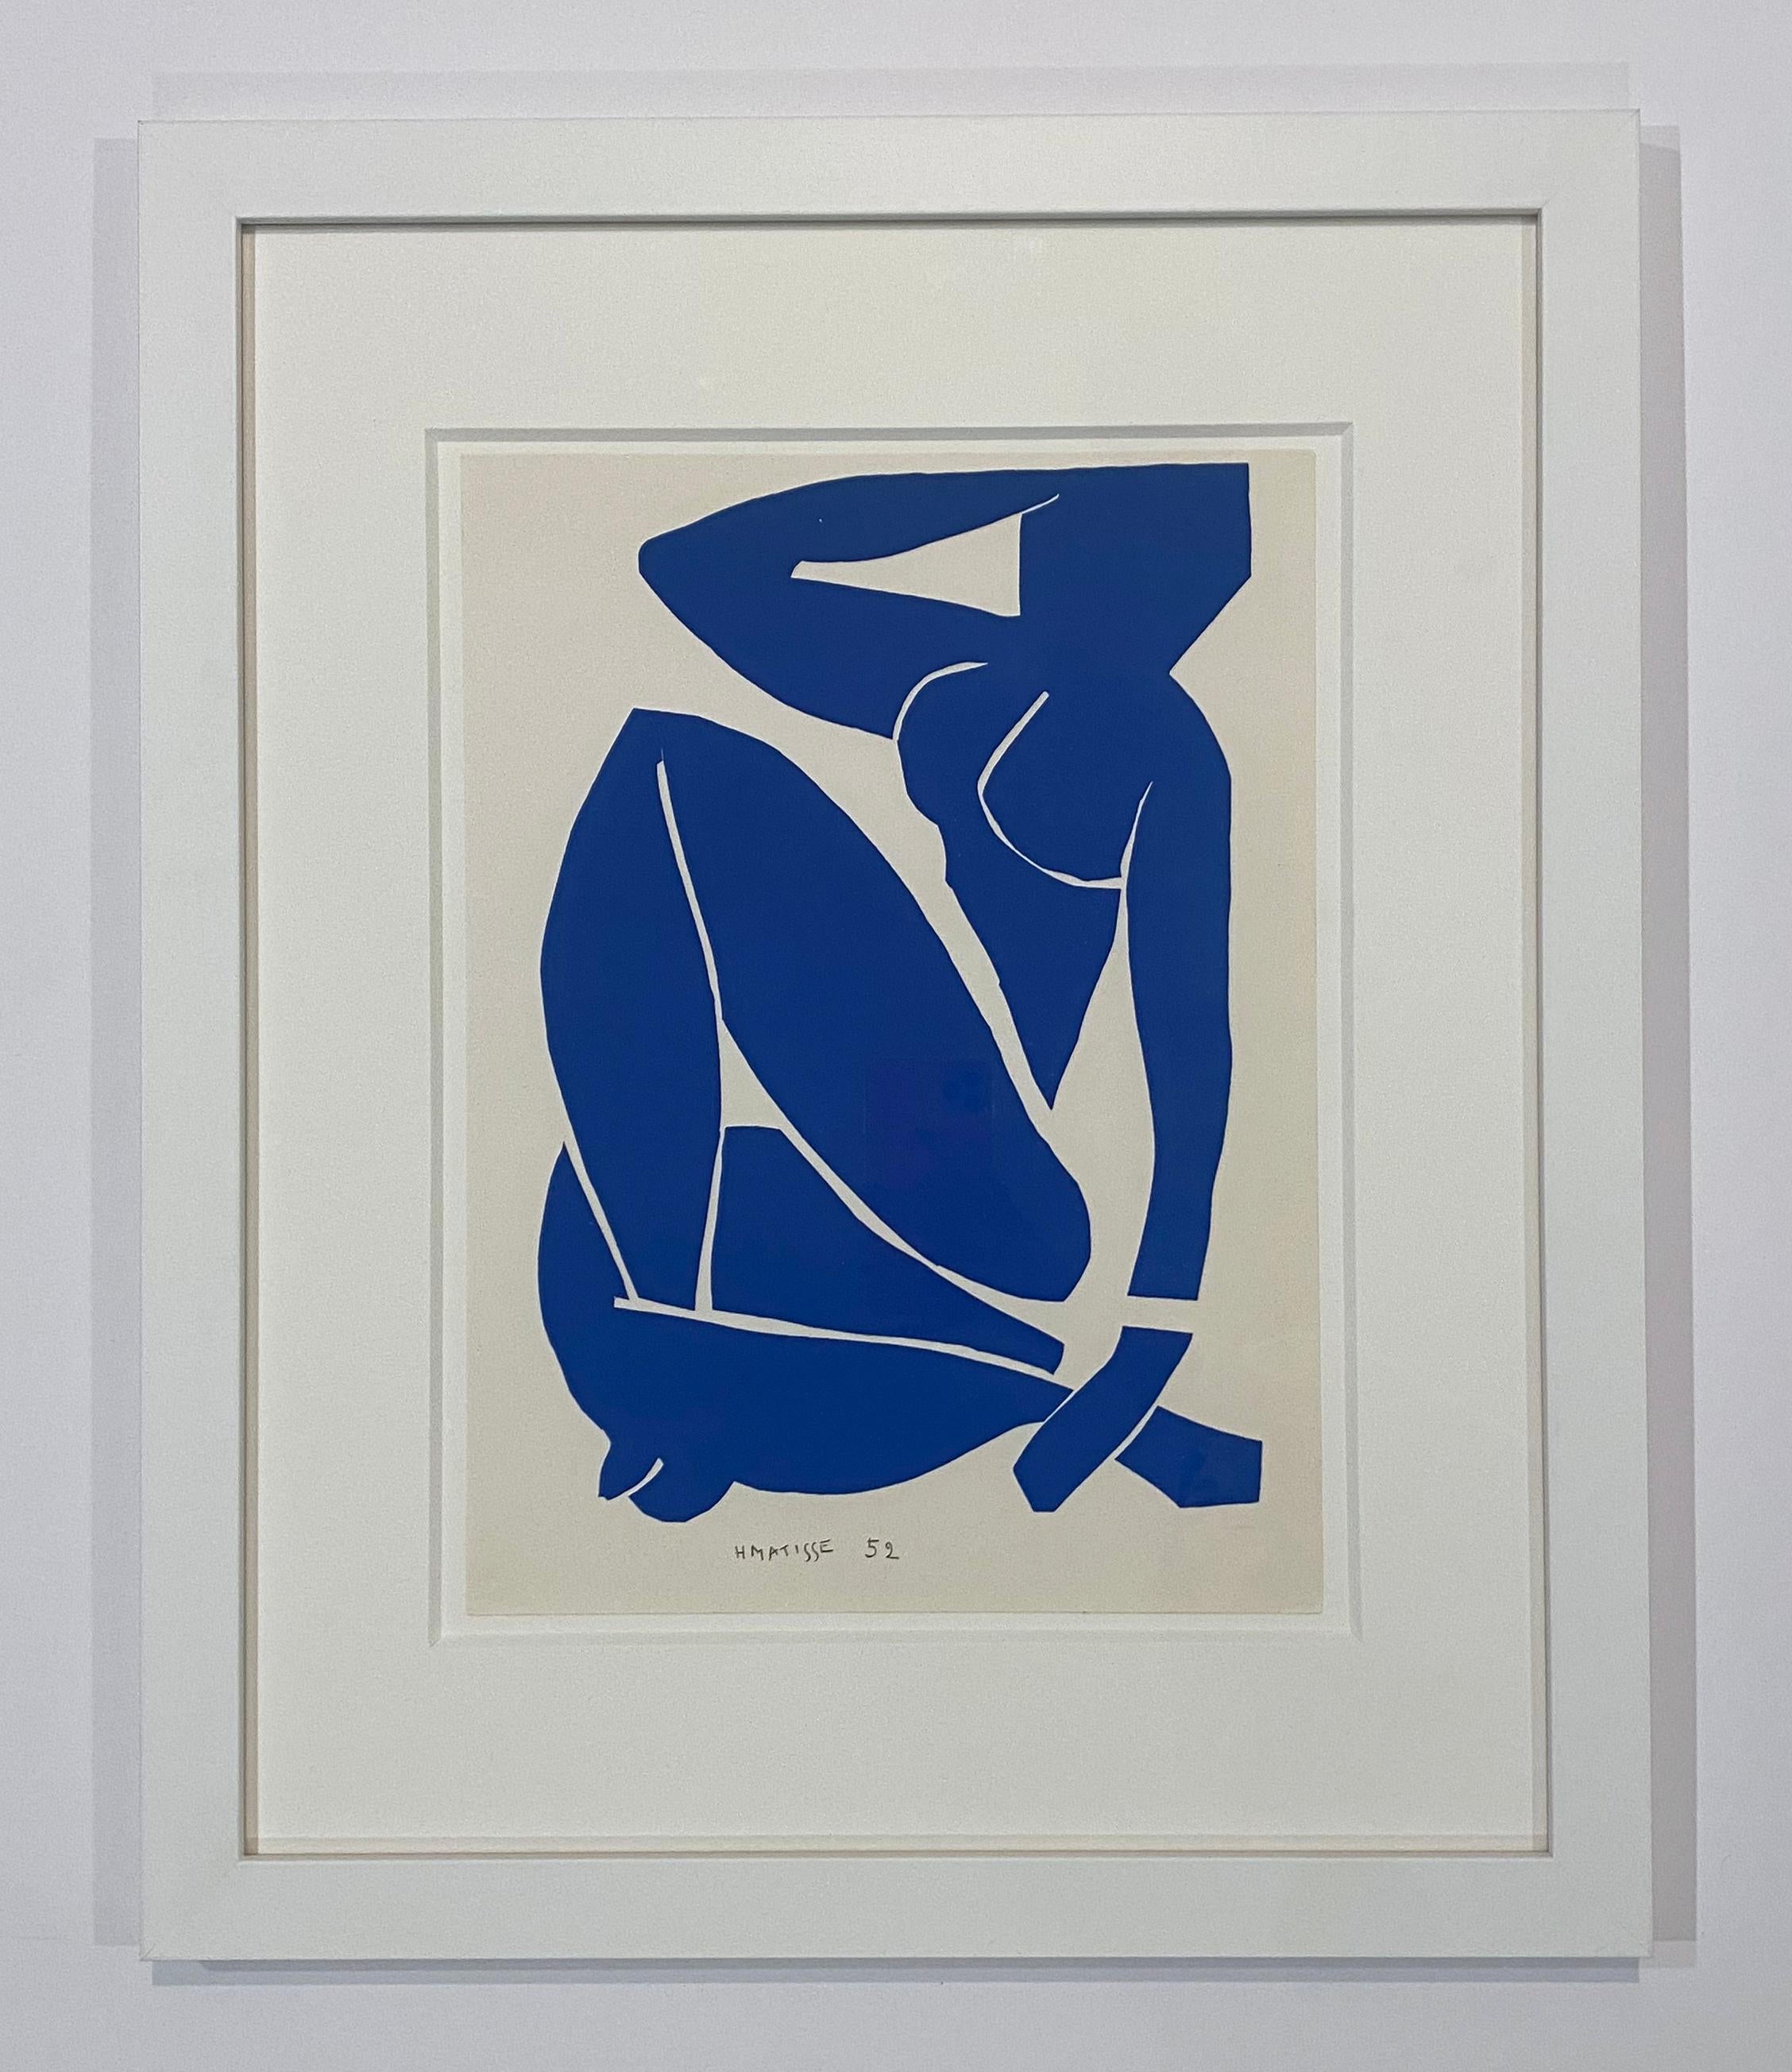 Nus Bleus III, from 1958 The Last Works of Henri Matisse - Print by (after) Henri Matisse